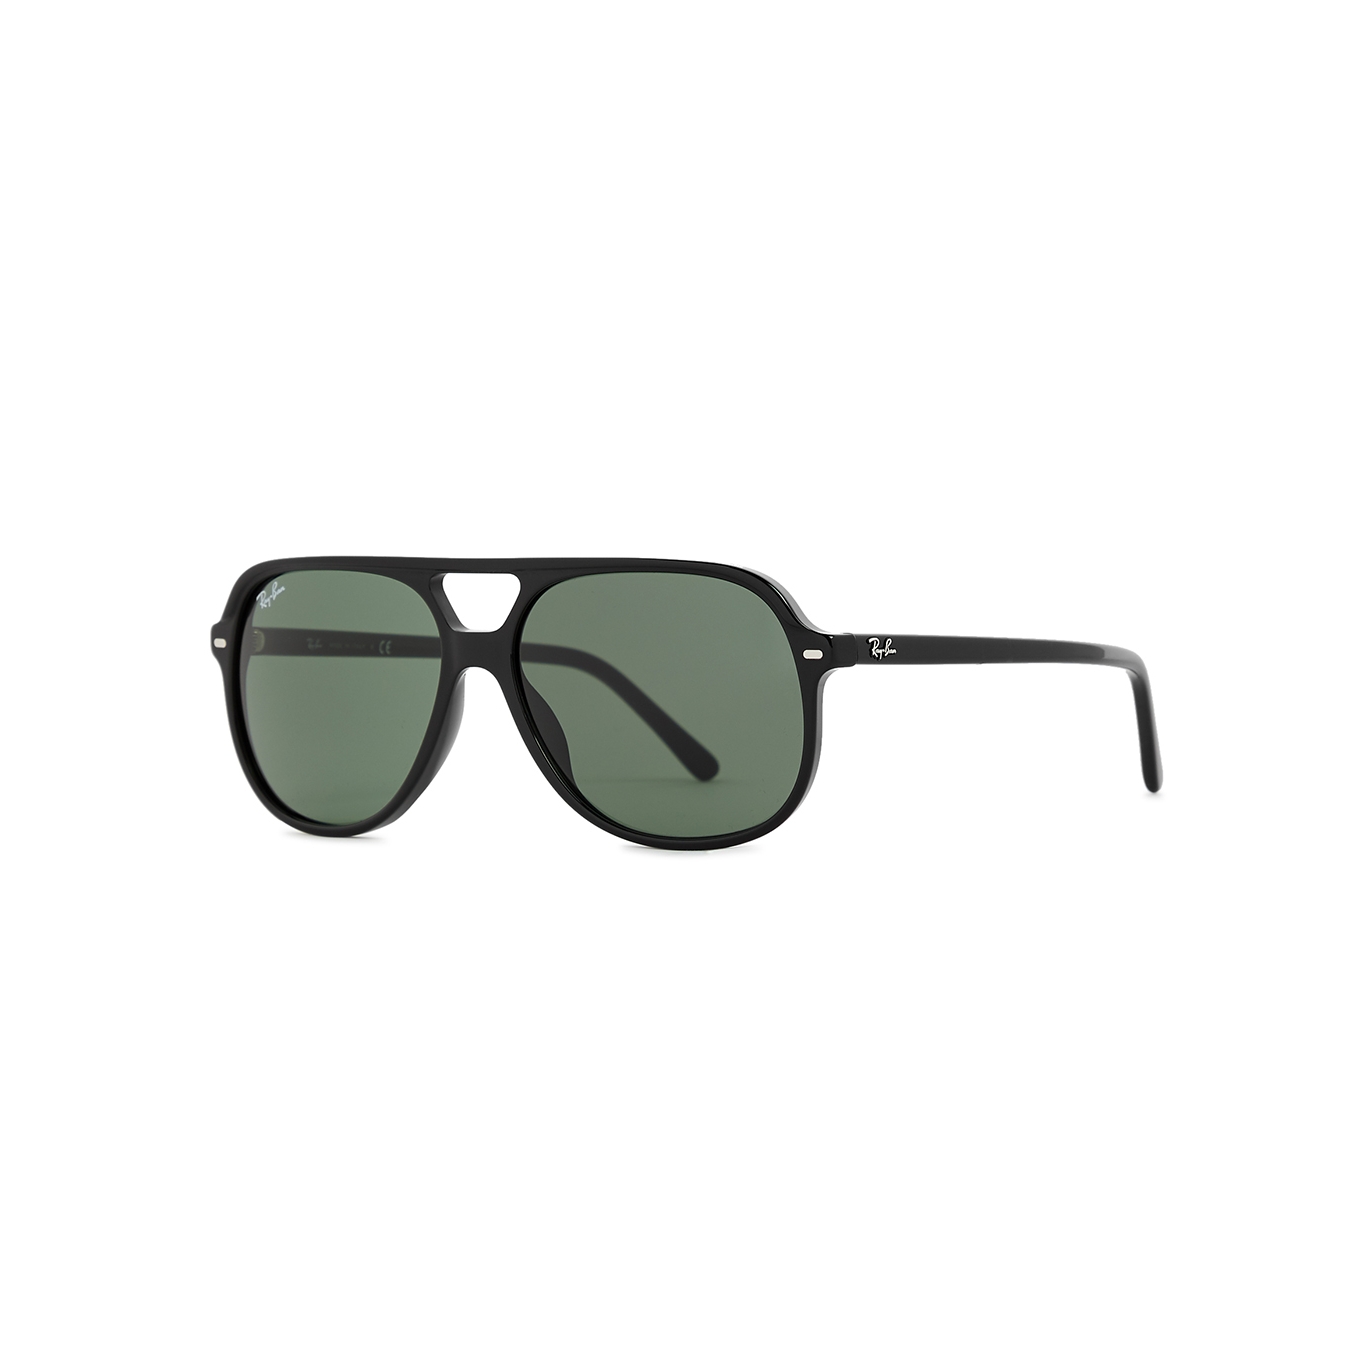 Ray-ban Bill 56 Aviator-style Sunglasses - Black